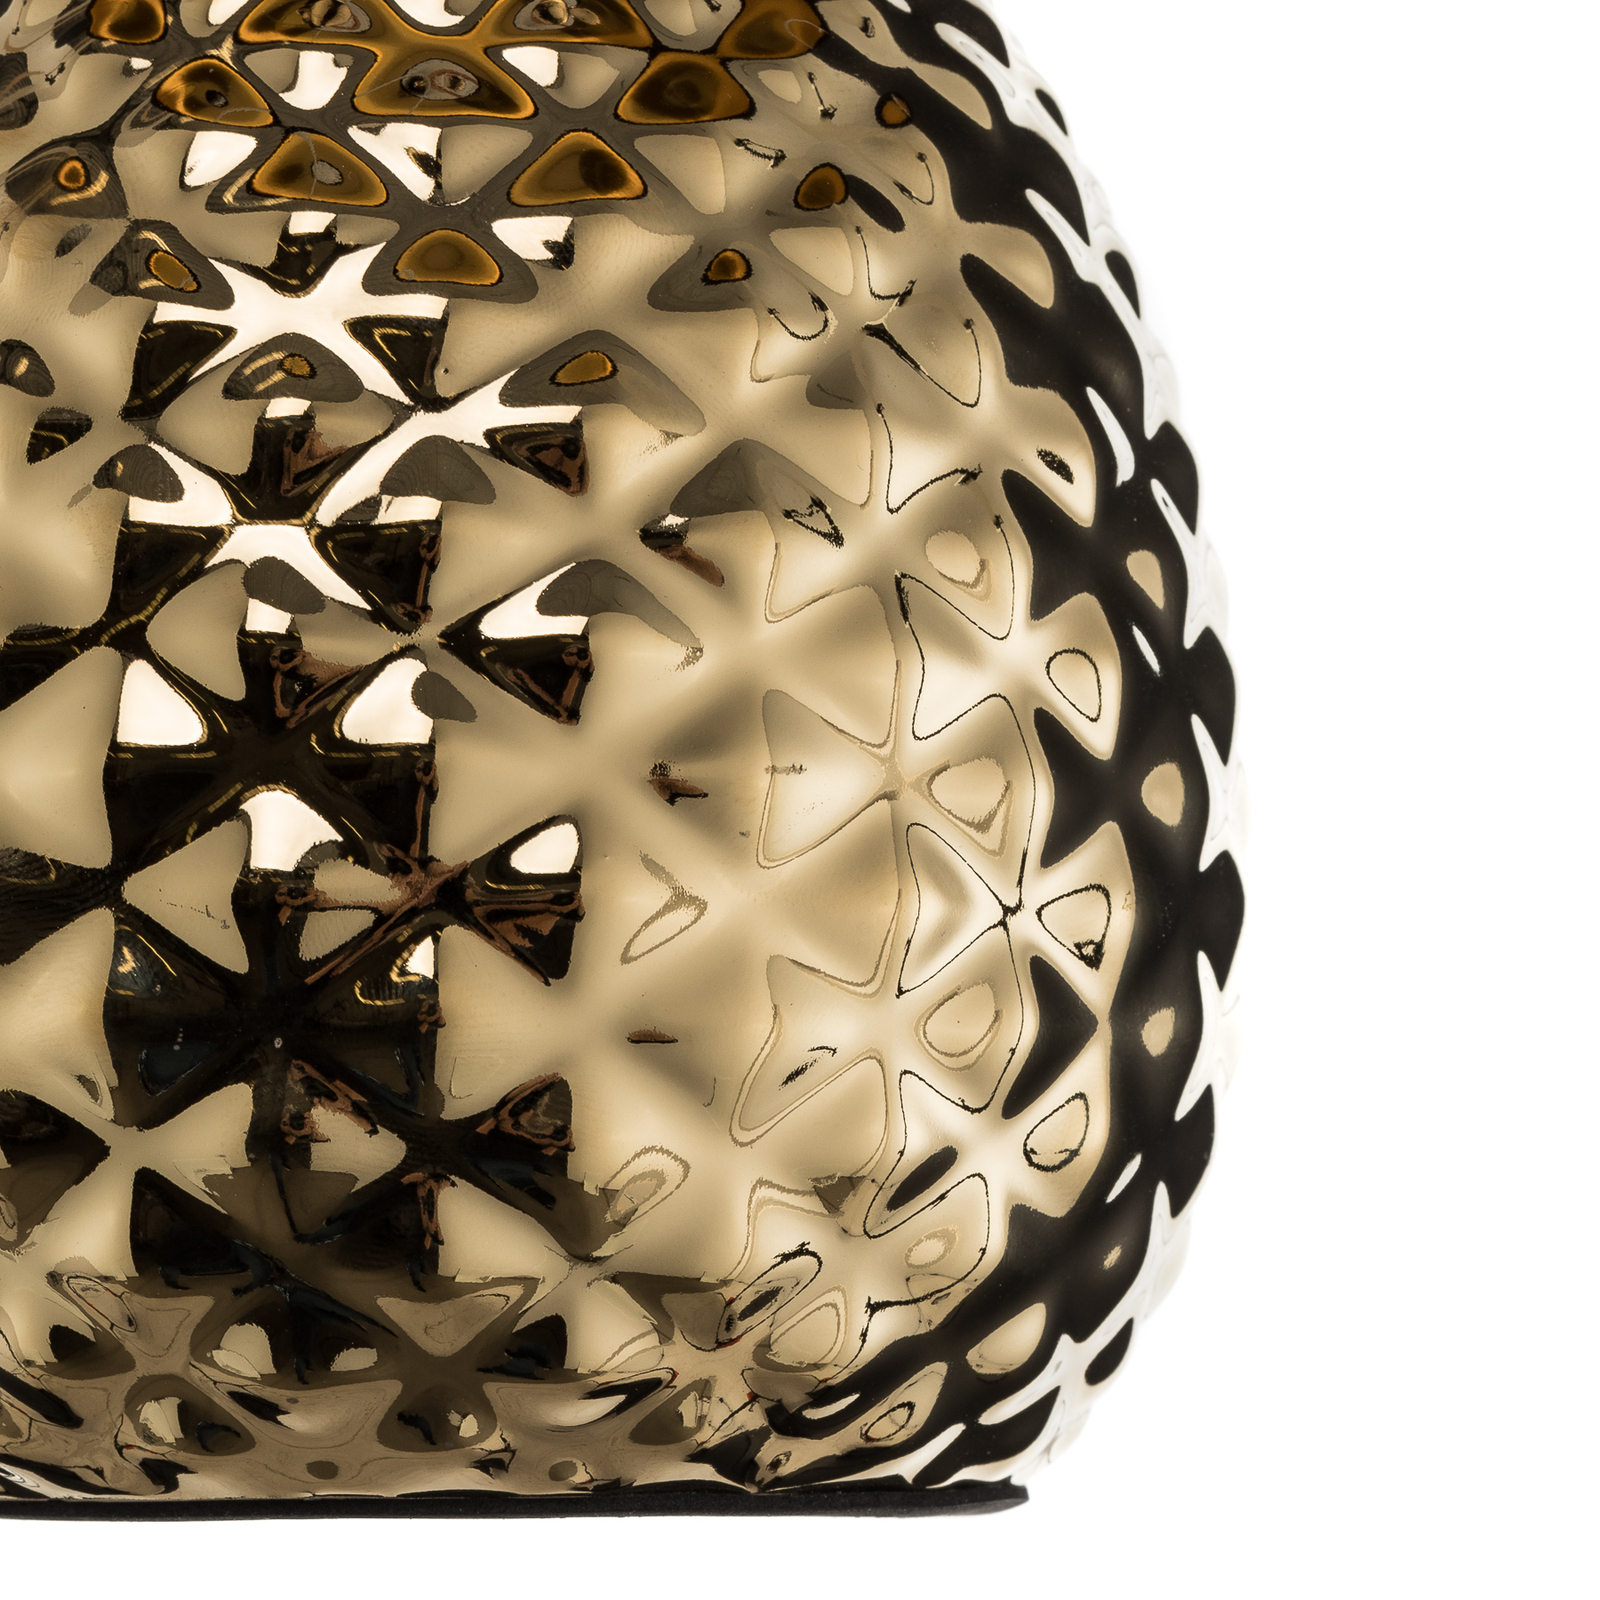 Elegante keramische tafellamp Pineapple goud-zwart